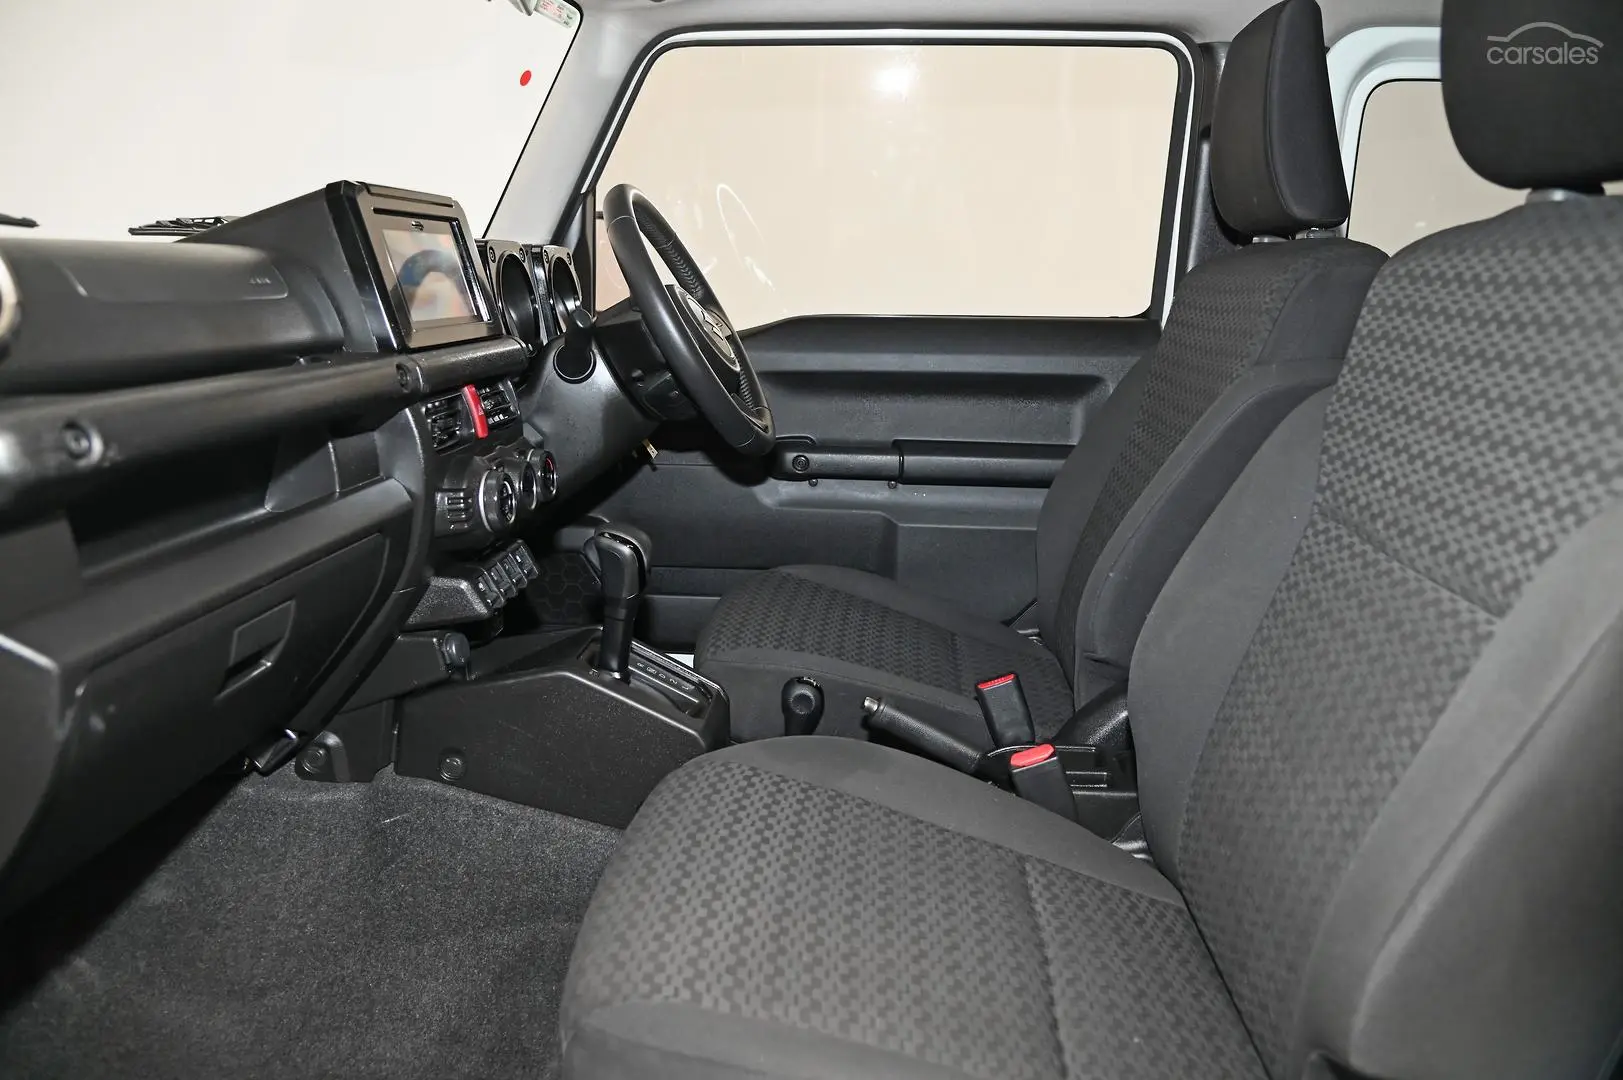 2020 Suzuki Jimny Image 15